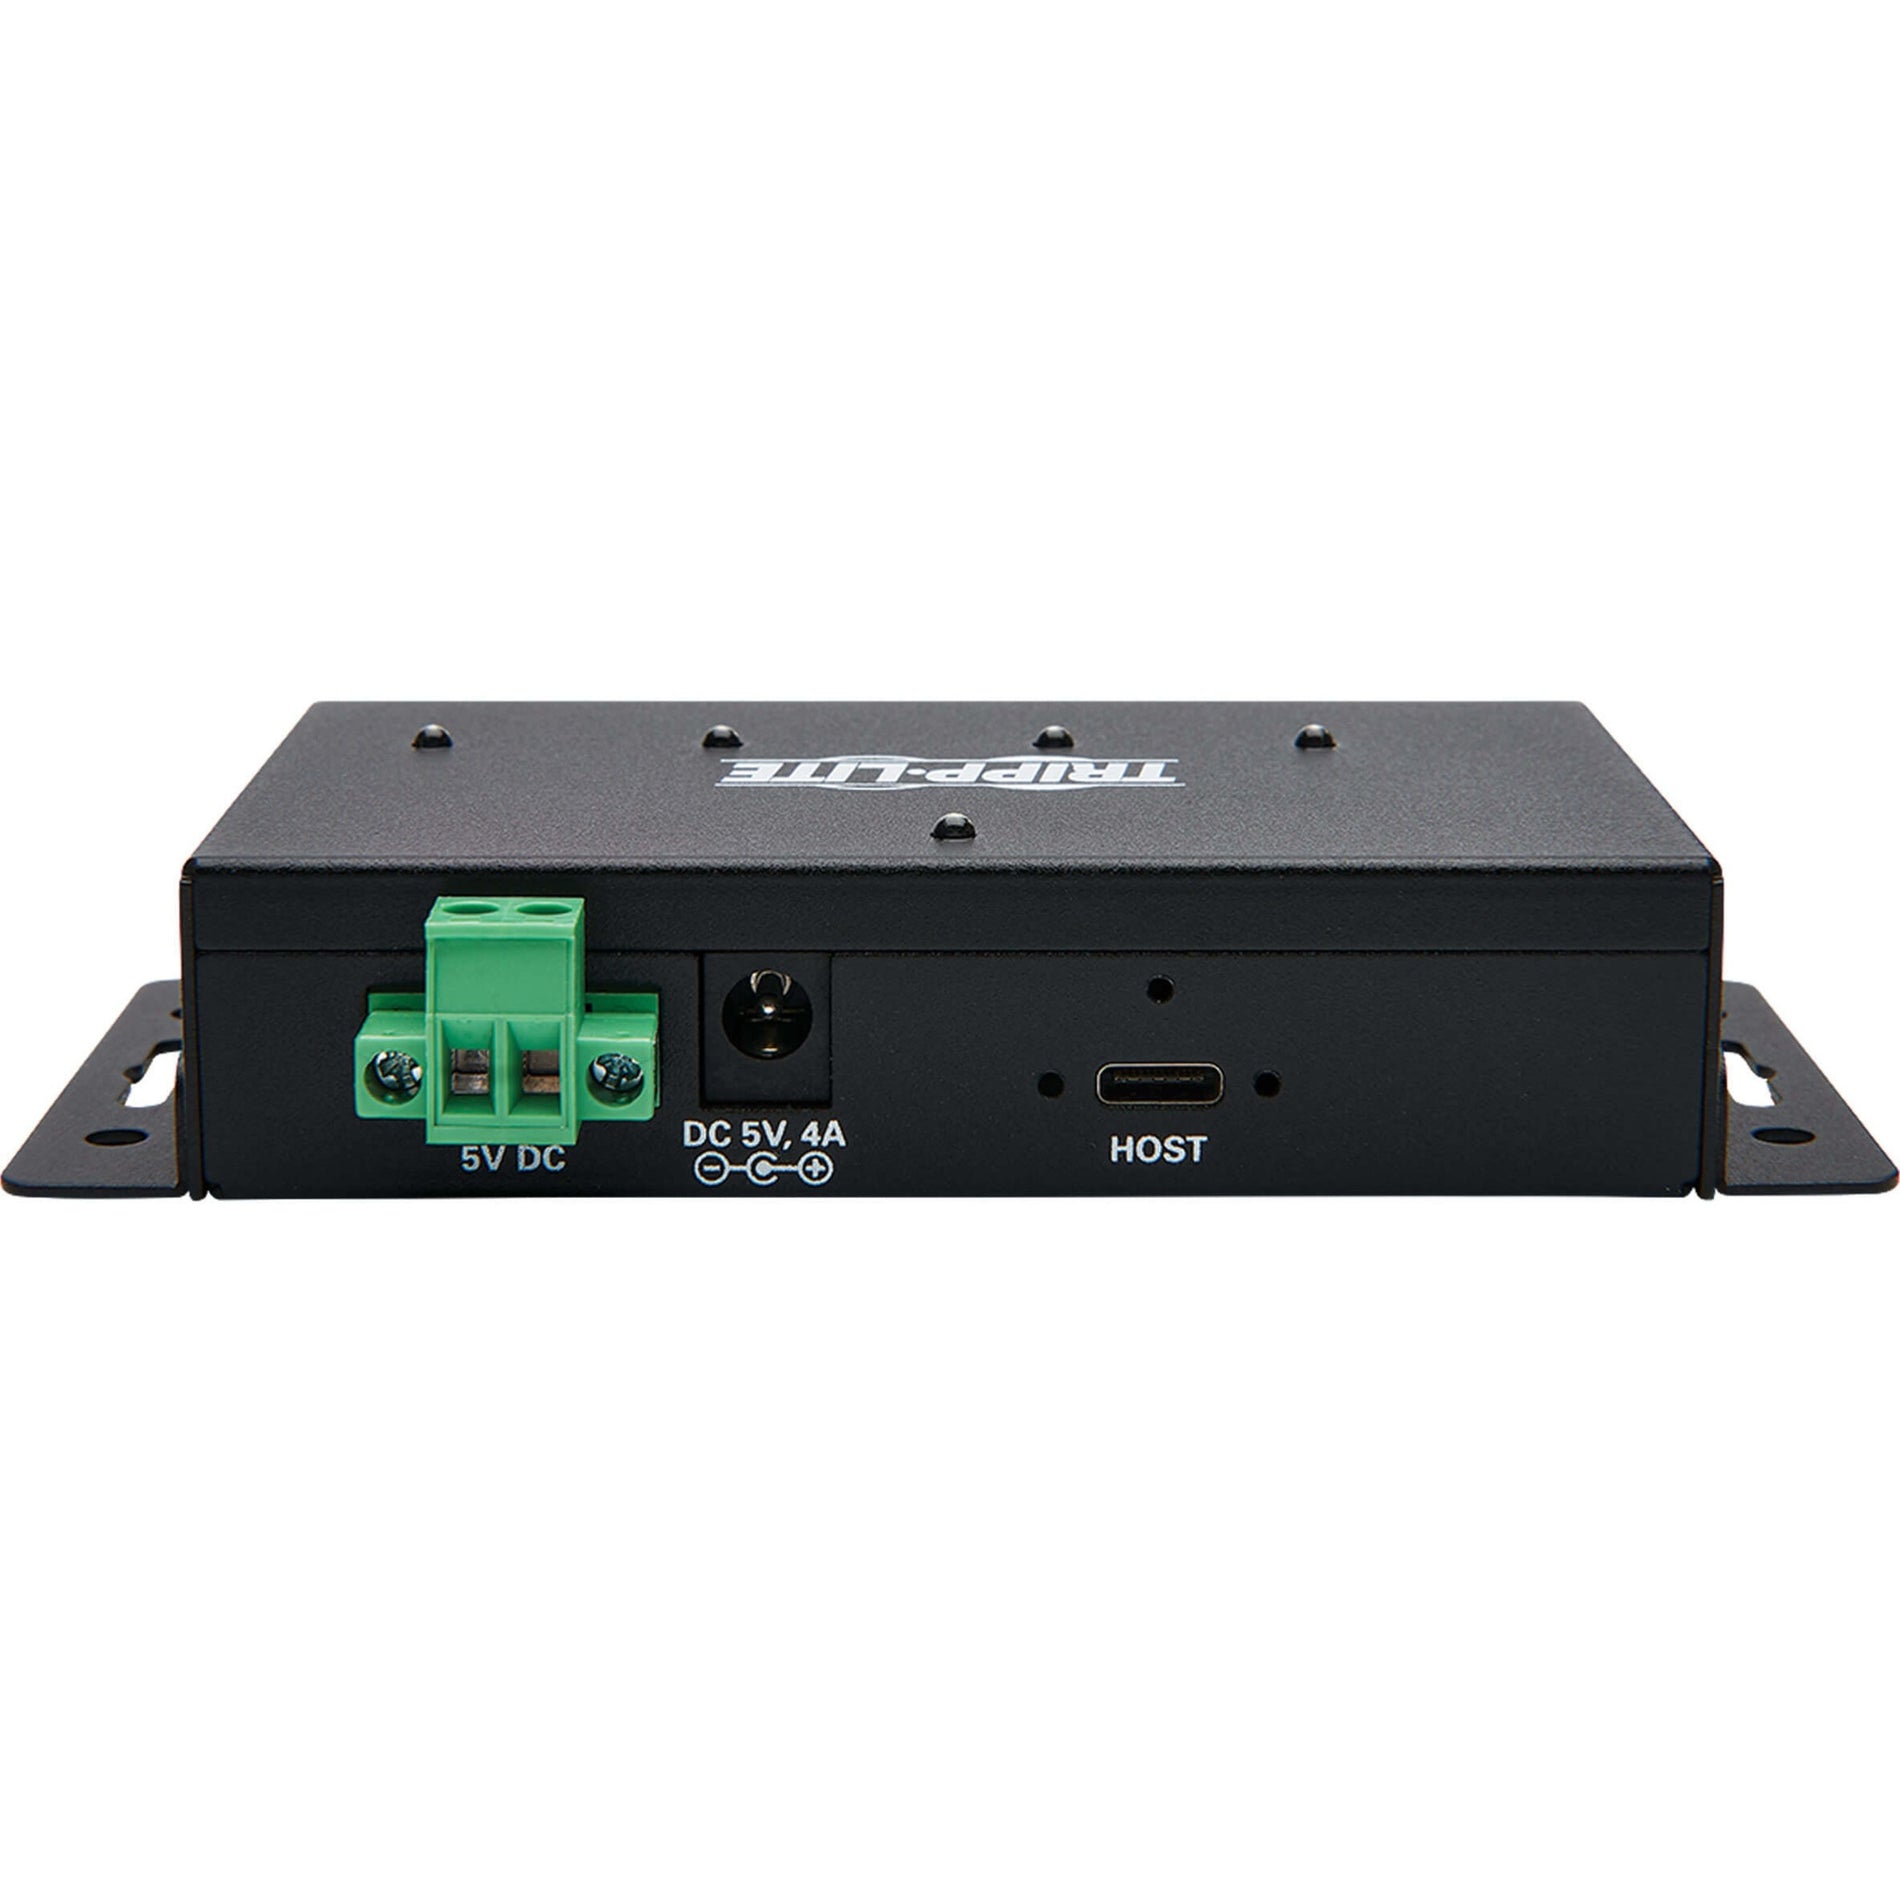 Tripp Lite U460-2A2C-IND USB 3.1 Gen 2 Hub, 4-Port Industrial-Grade, PC/Mac Compatible